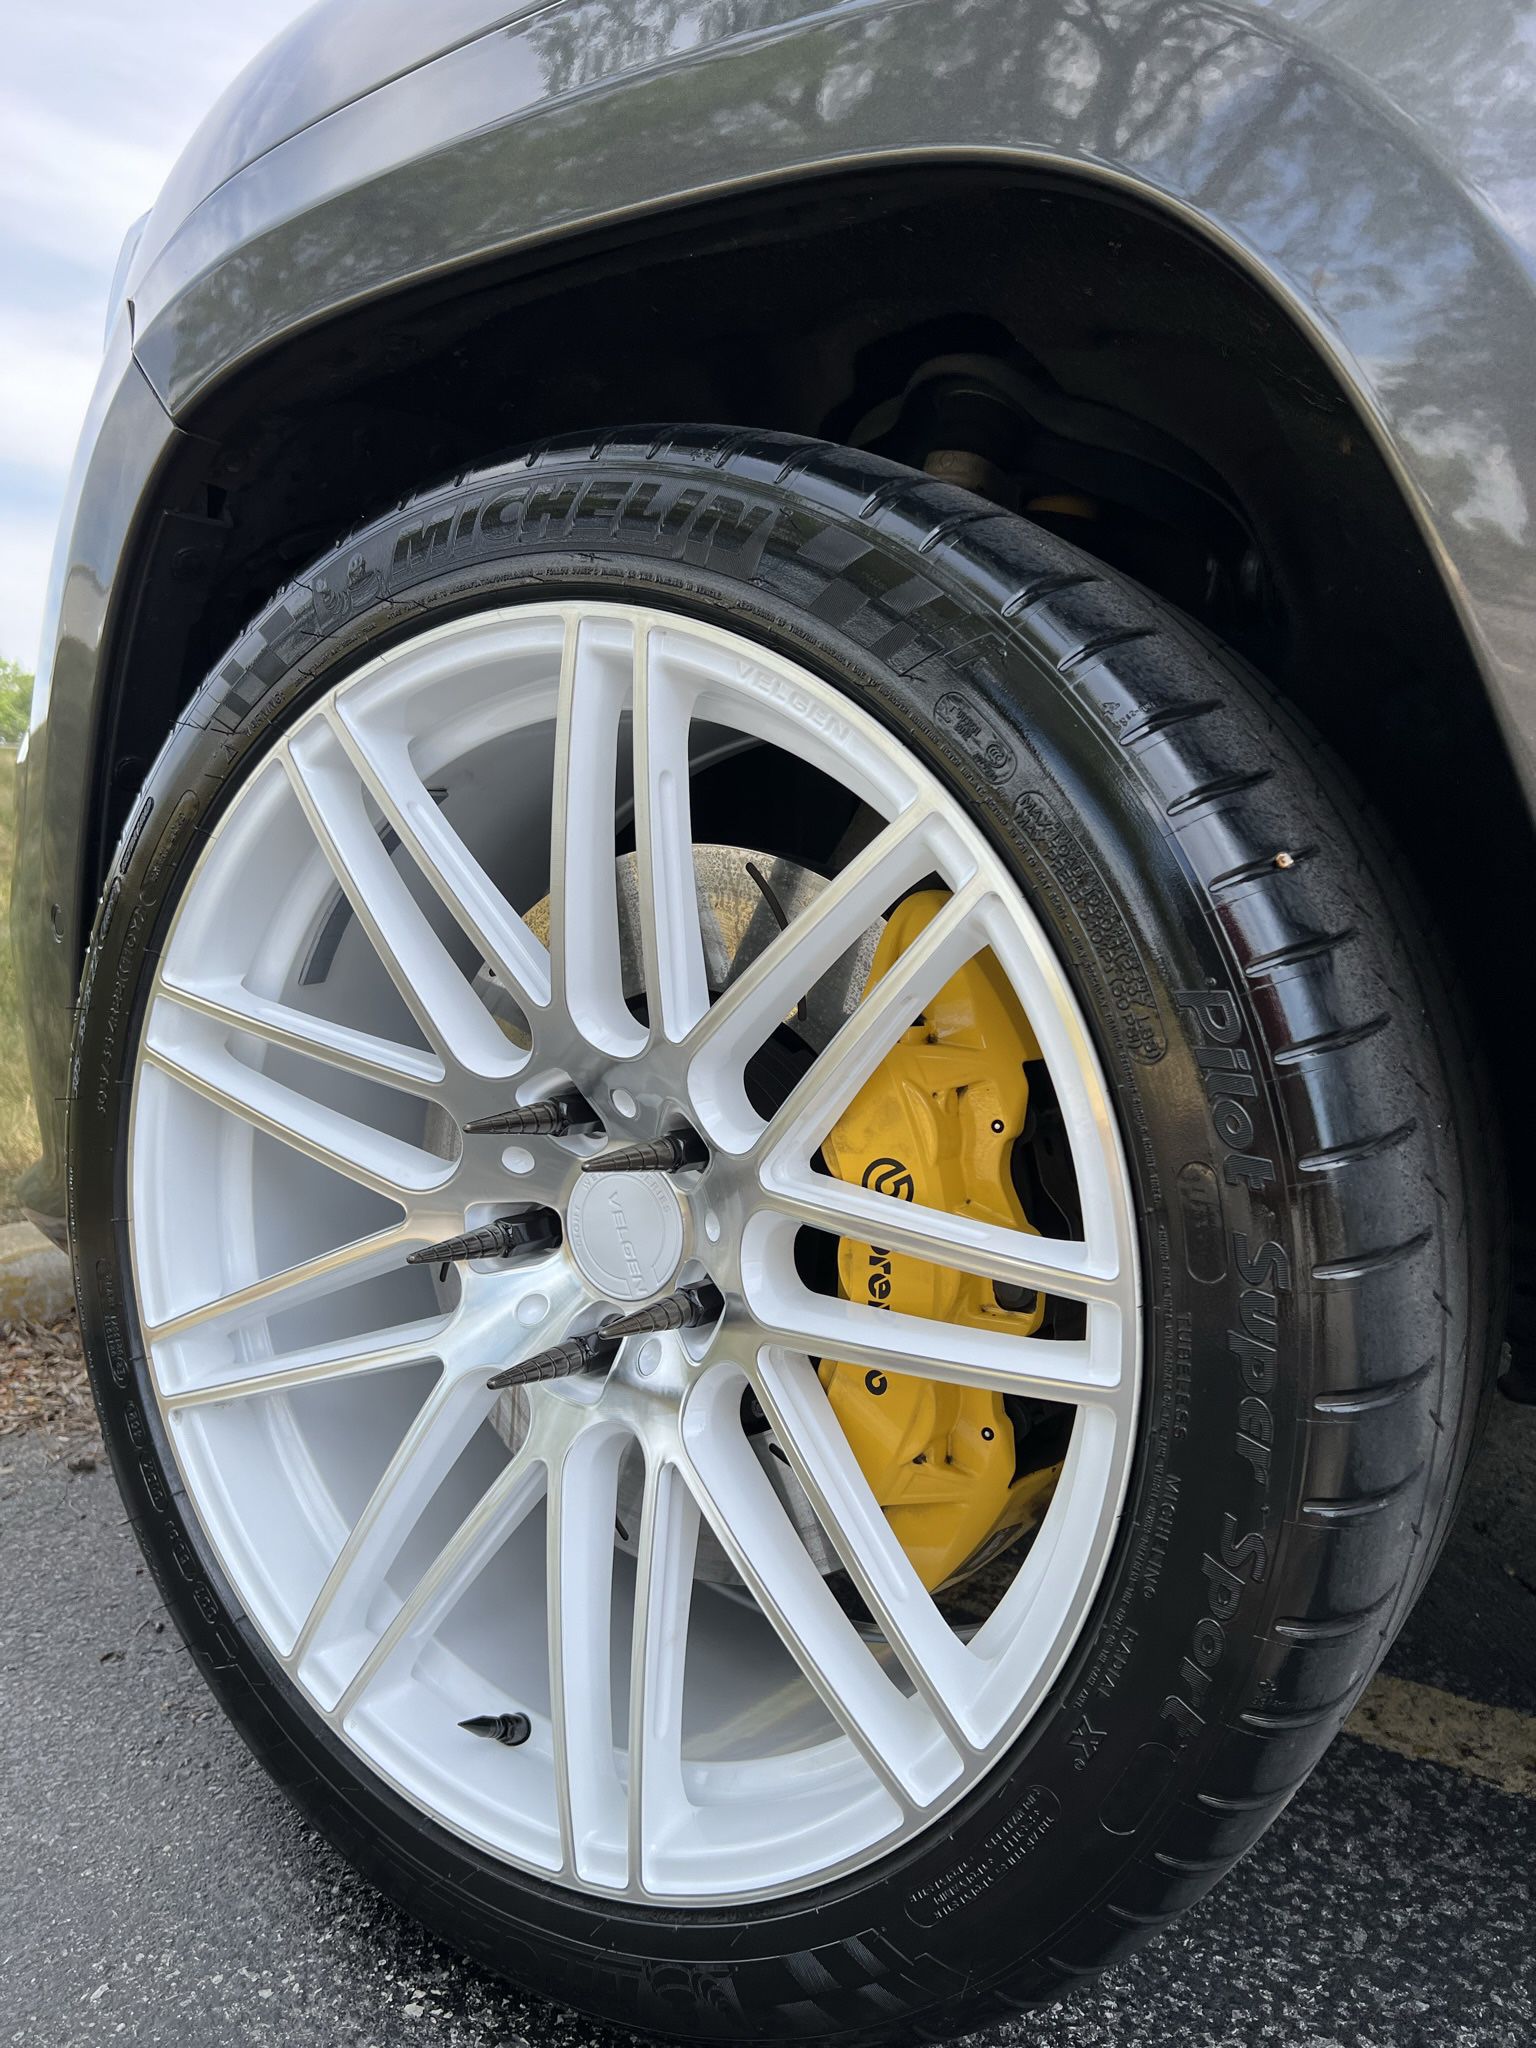 22” Velgen VF9 Wheels & Michelin Pilot Super Sport Tires